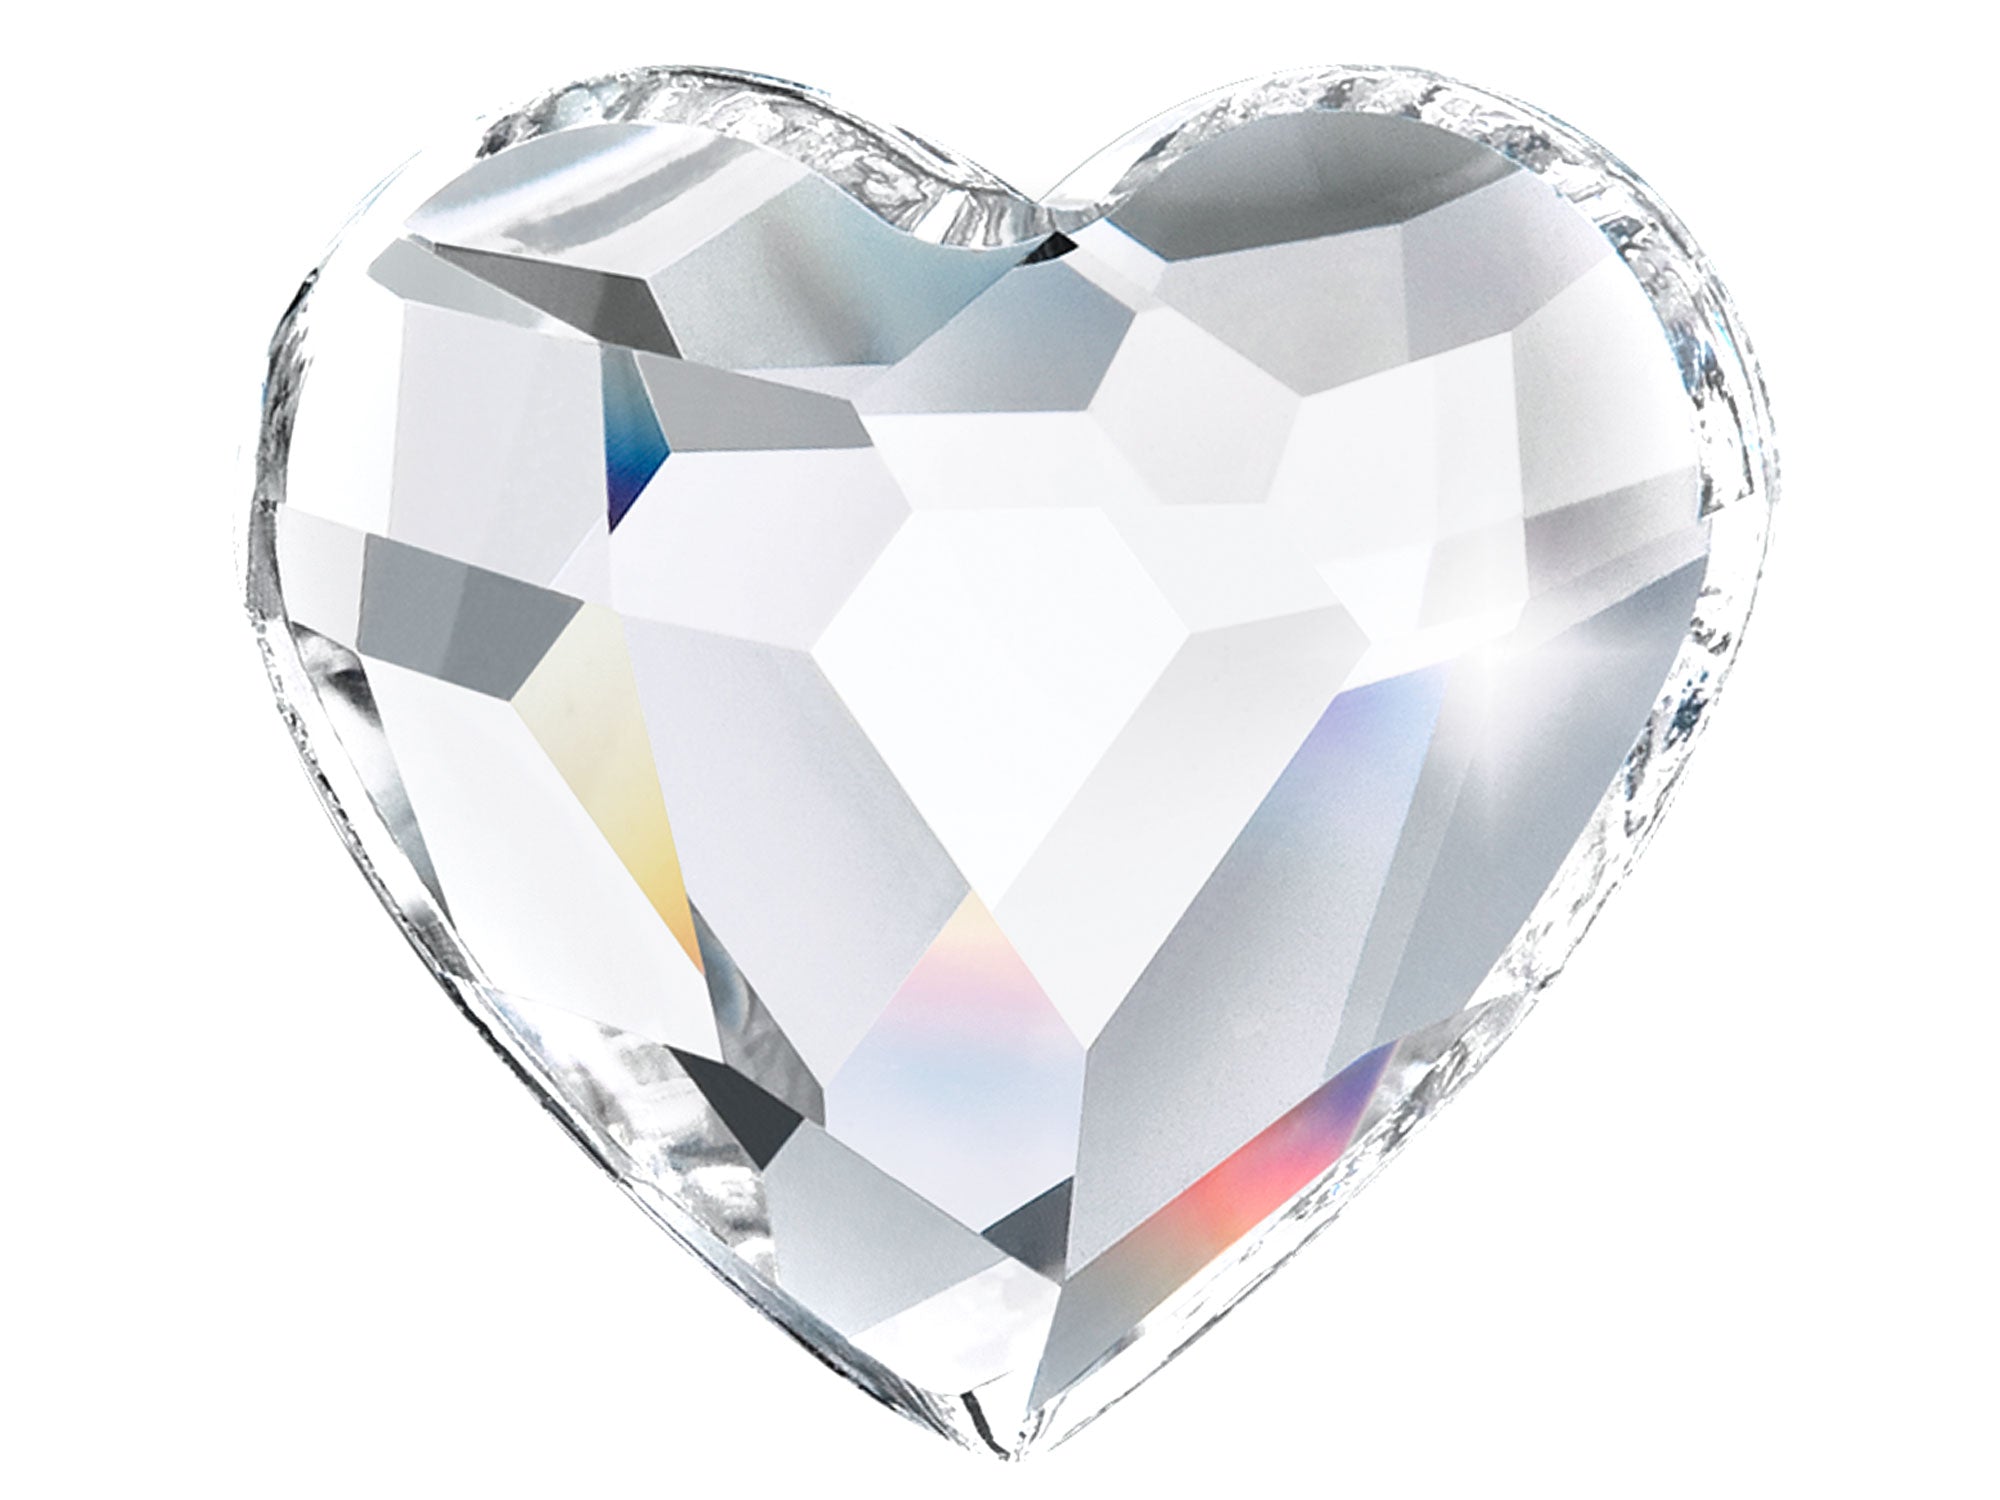 Crystal clear, Preciosa Czech MC HEART Maxima Flatback Stones Style #438-18-301 D-Silver Foiled, size 14mm, 6pcs, P906